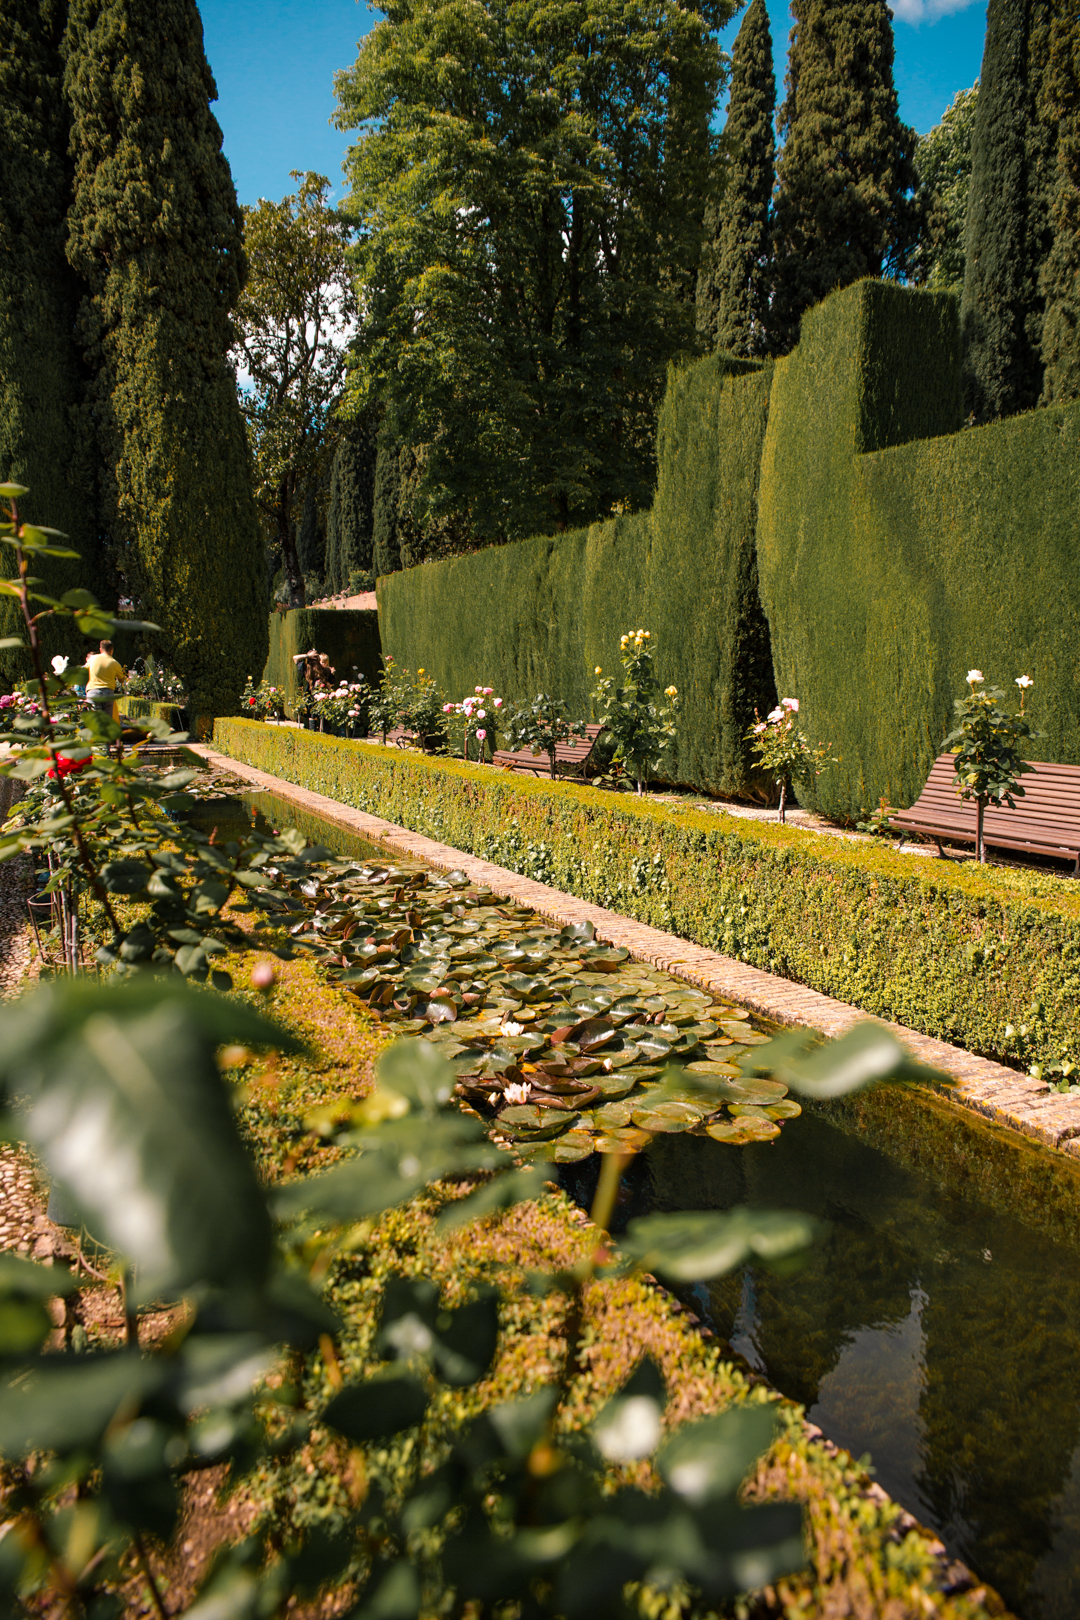 Gardens of Generalife in Alhambra, Granada, Spain.